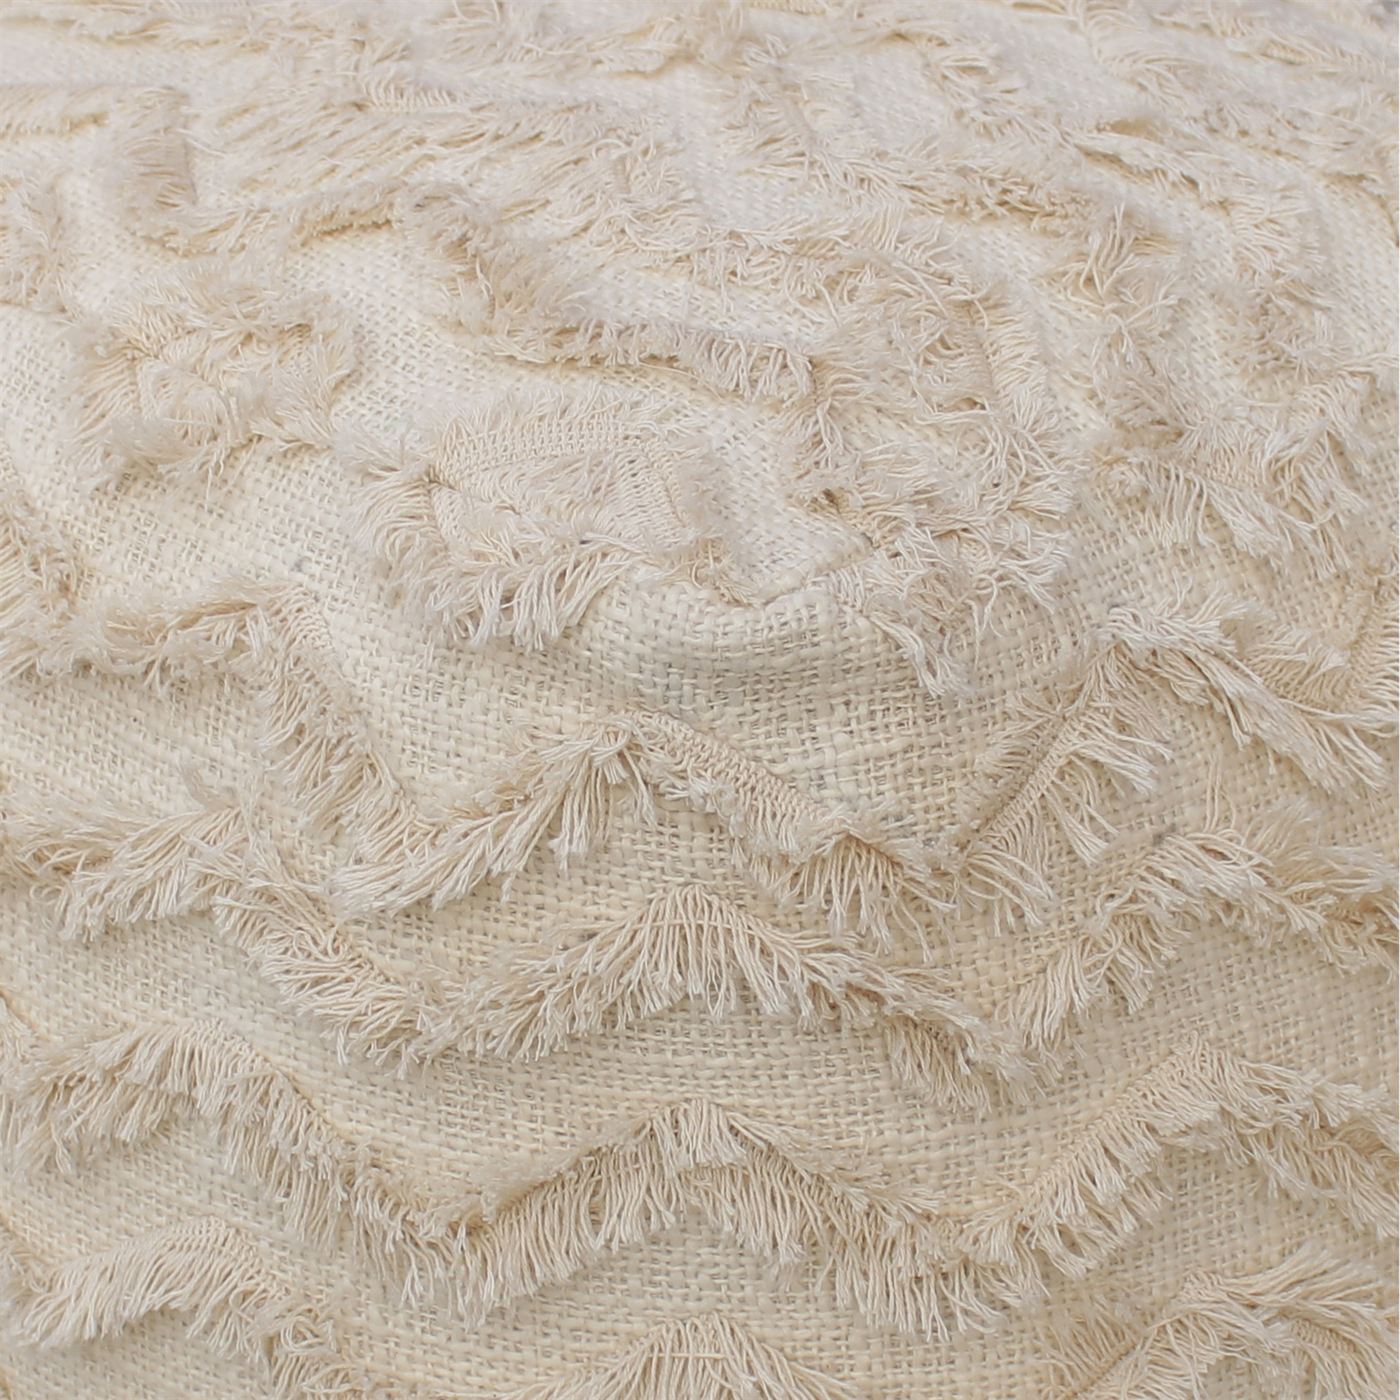 Chorio Pouf, Cotton, Natural White, Hm Stitching, Flat Weave